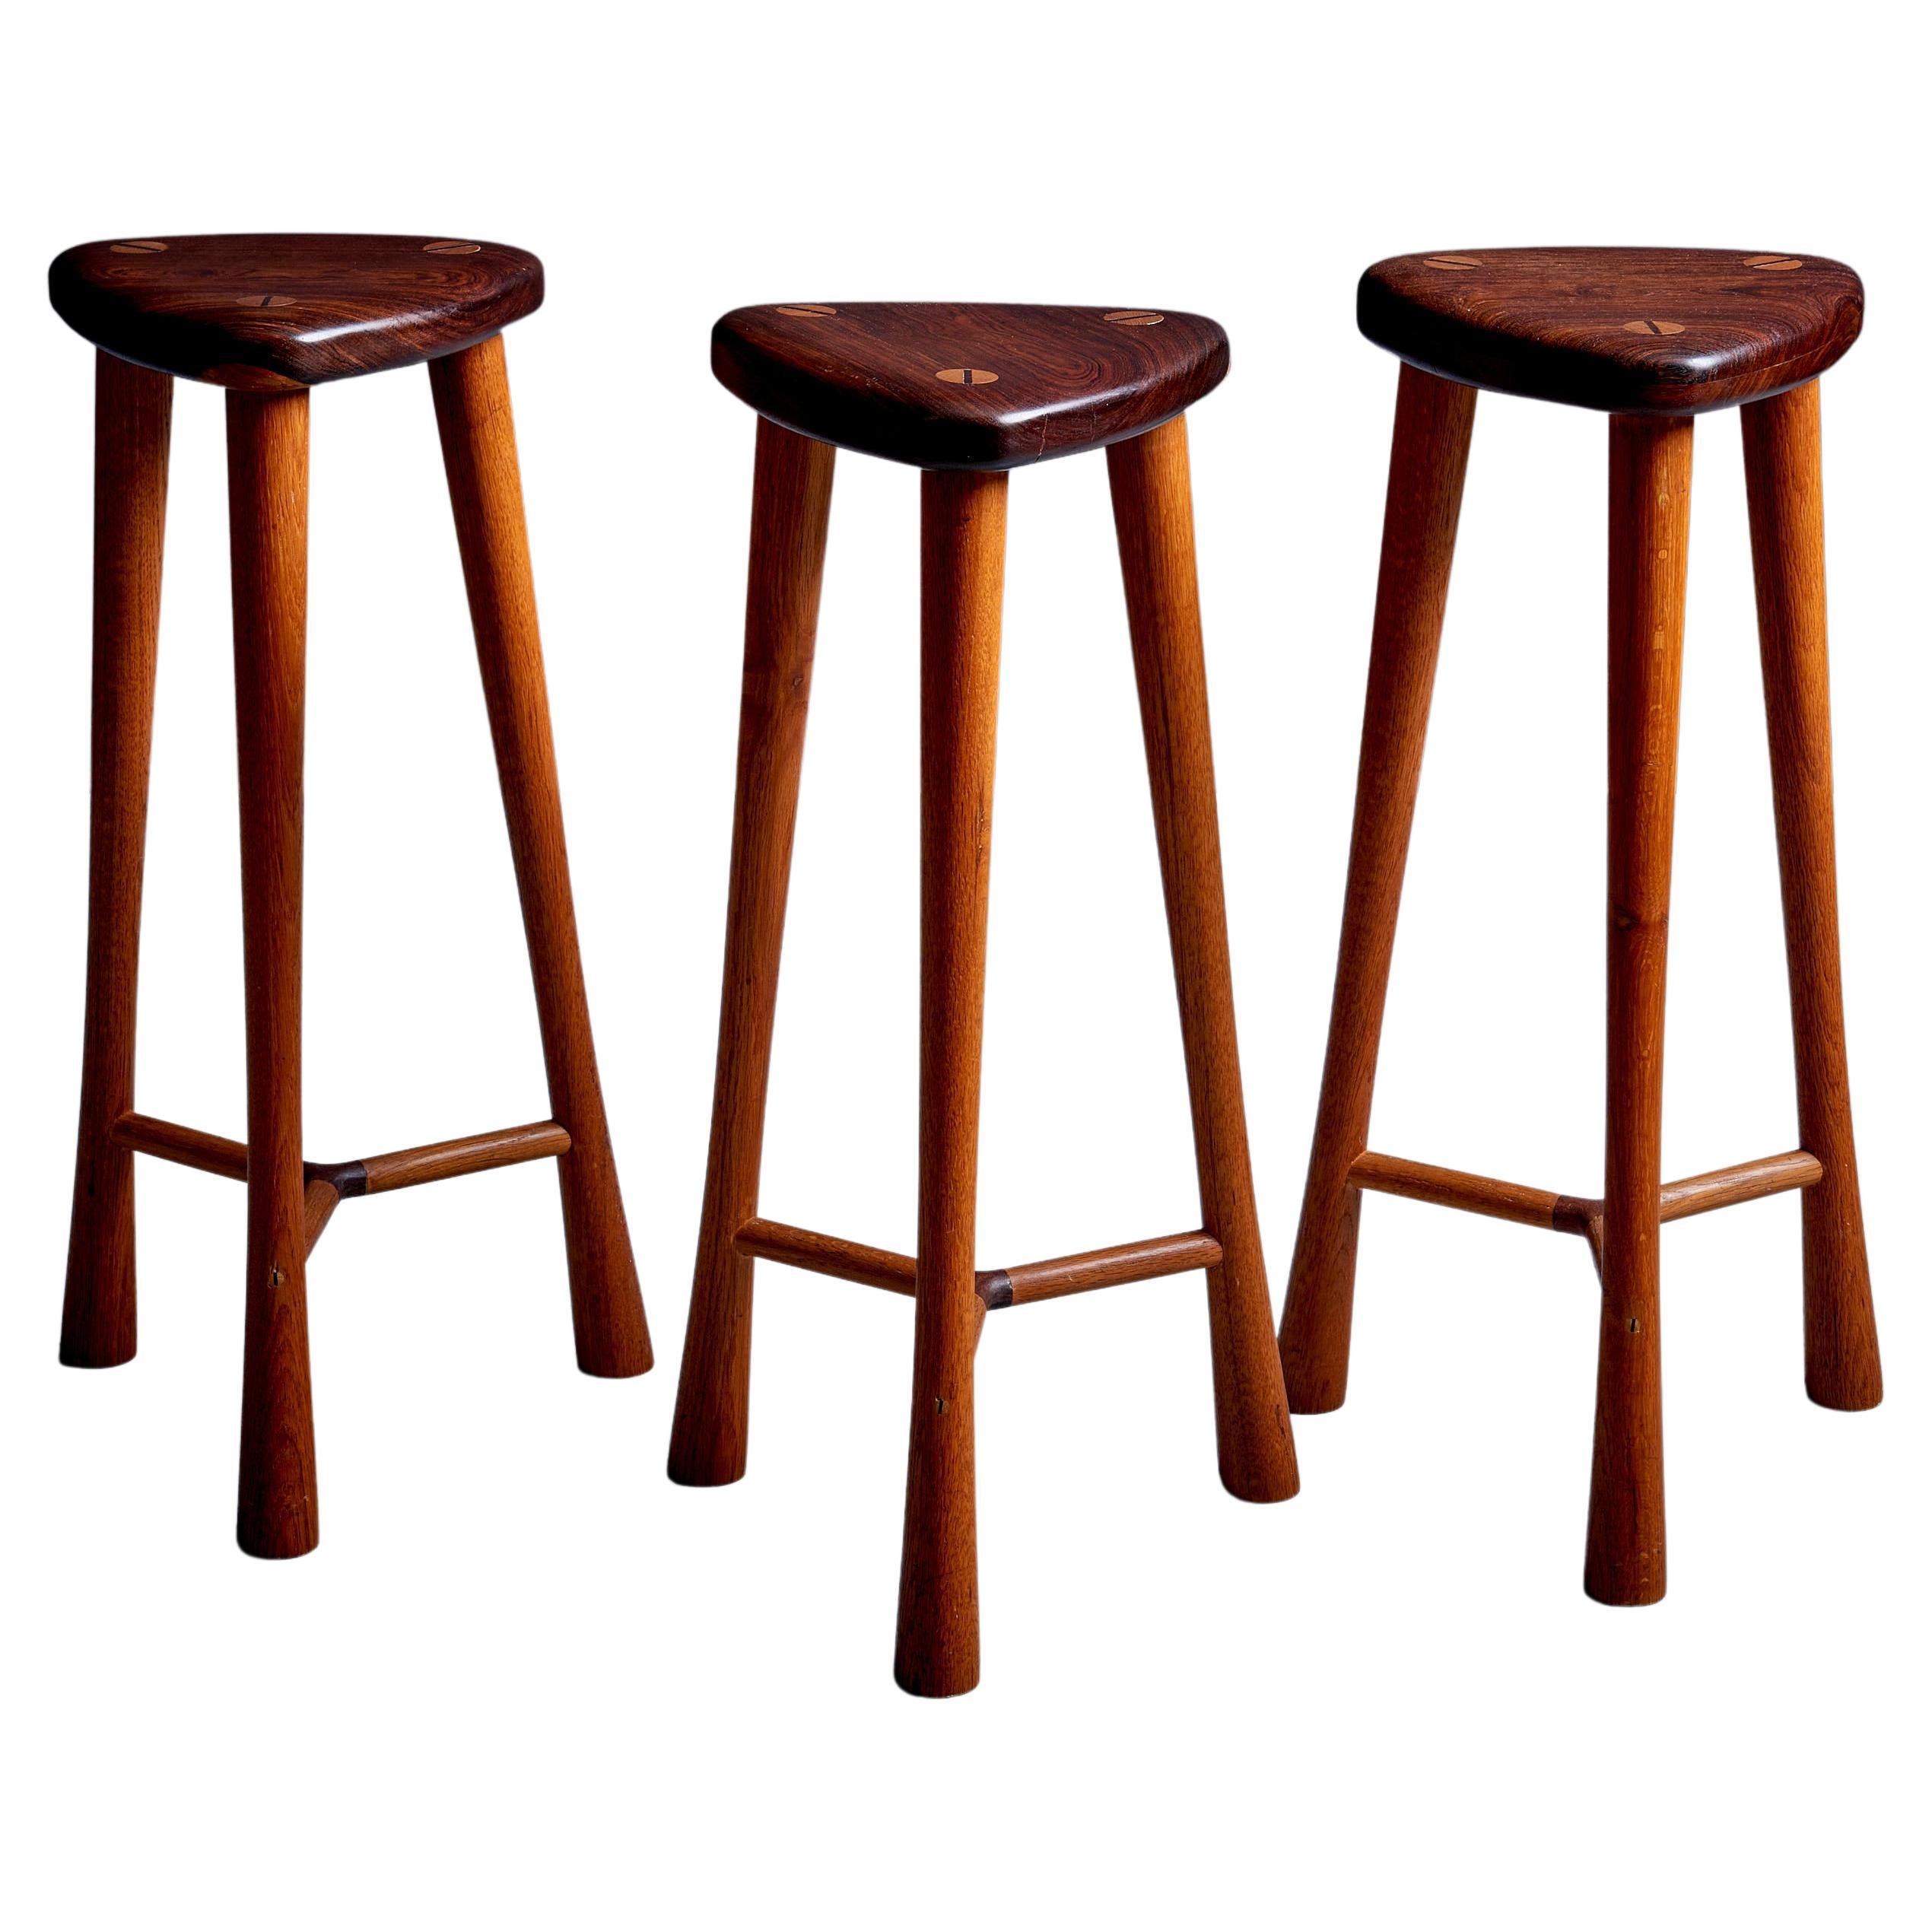 Set of three Studio stools, USA - 1980s